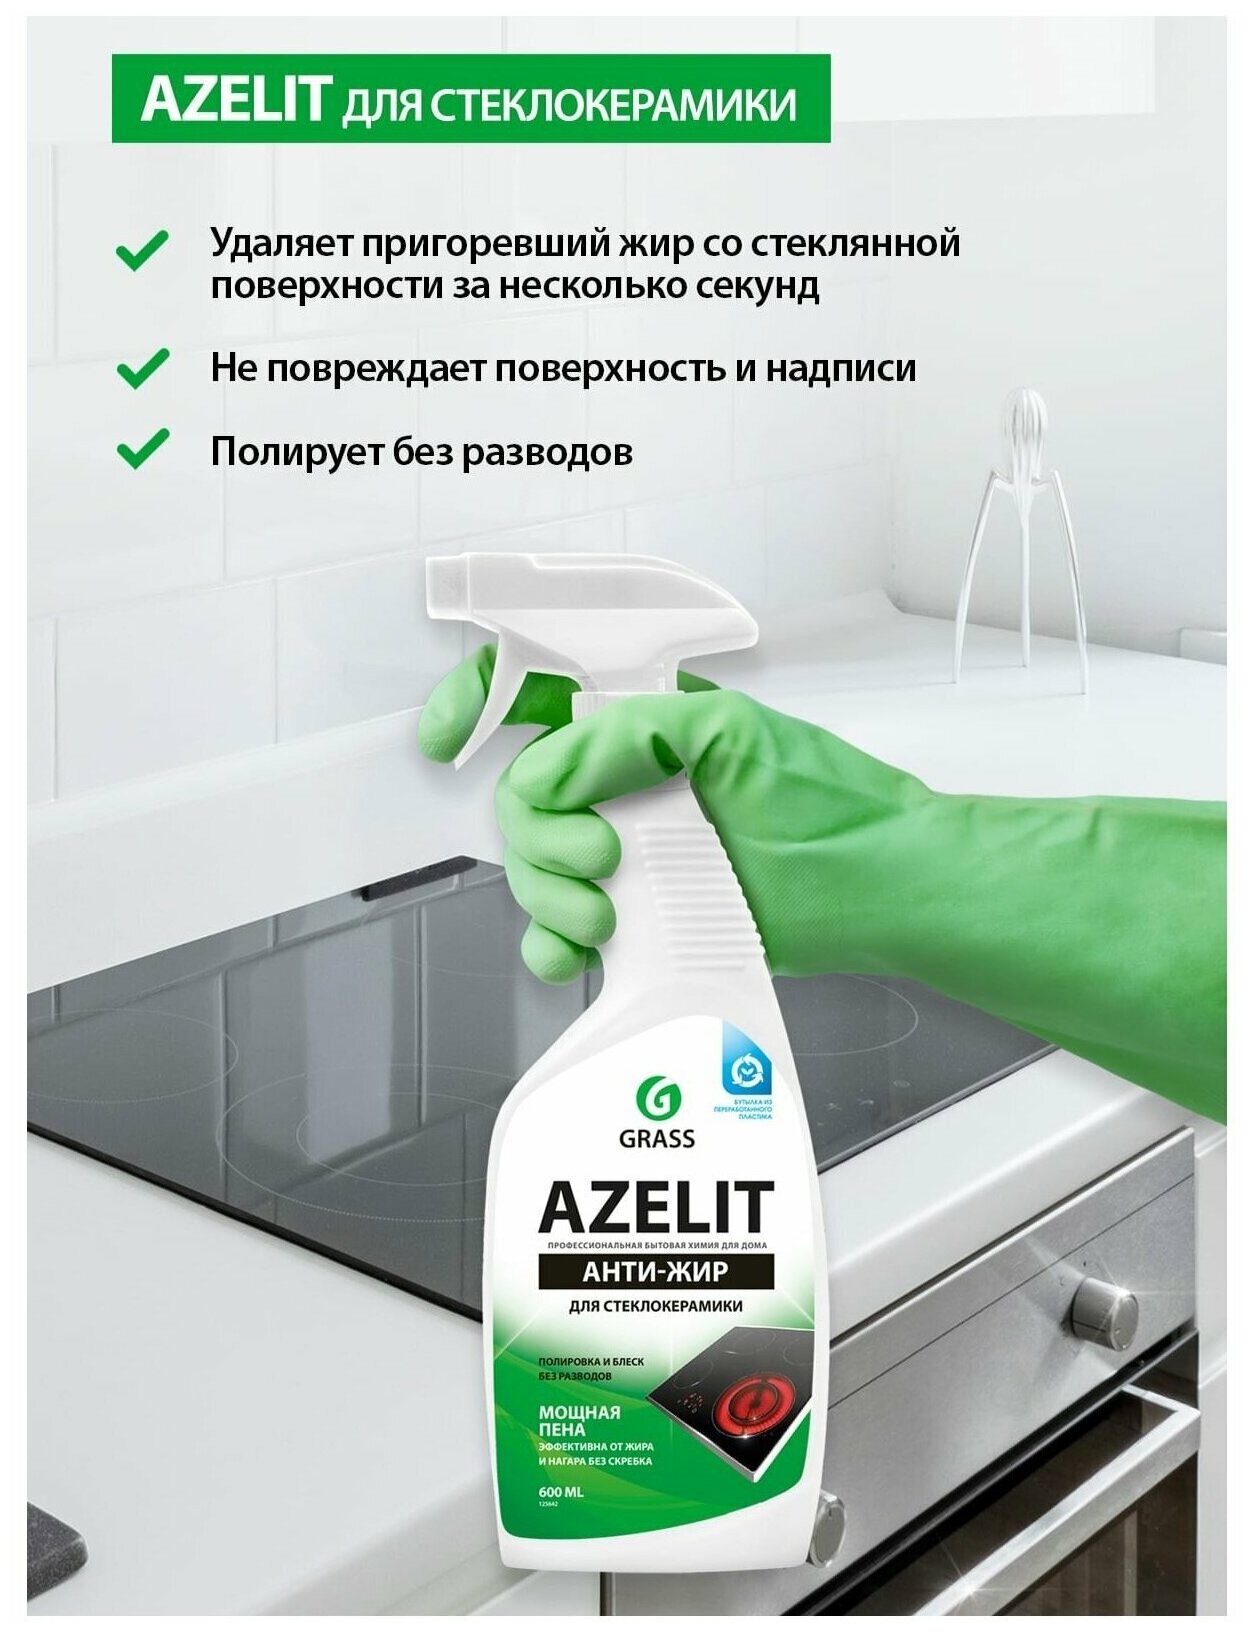 Антижир Азелит Grass Azelit для кухни средство для удаления жира анти жир 600 мл для стеклокерамики - фотография № 13